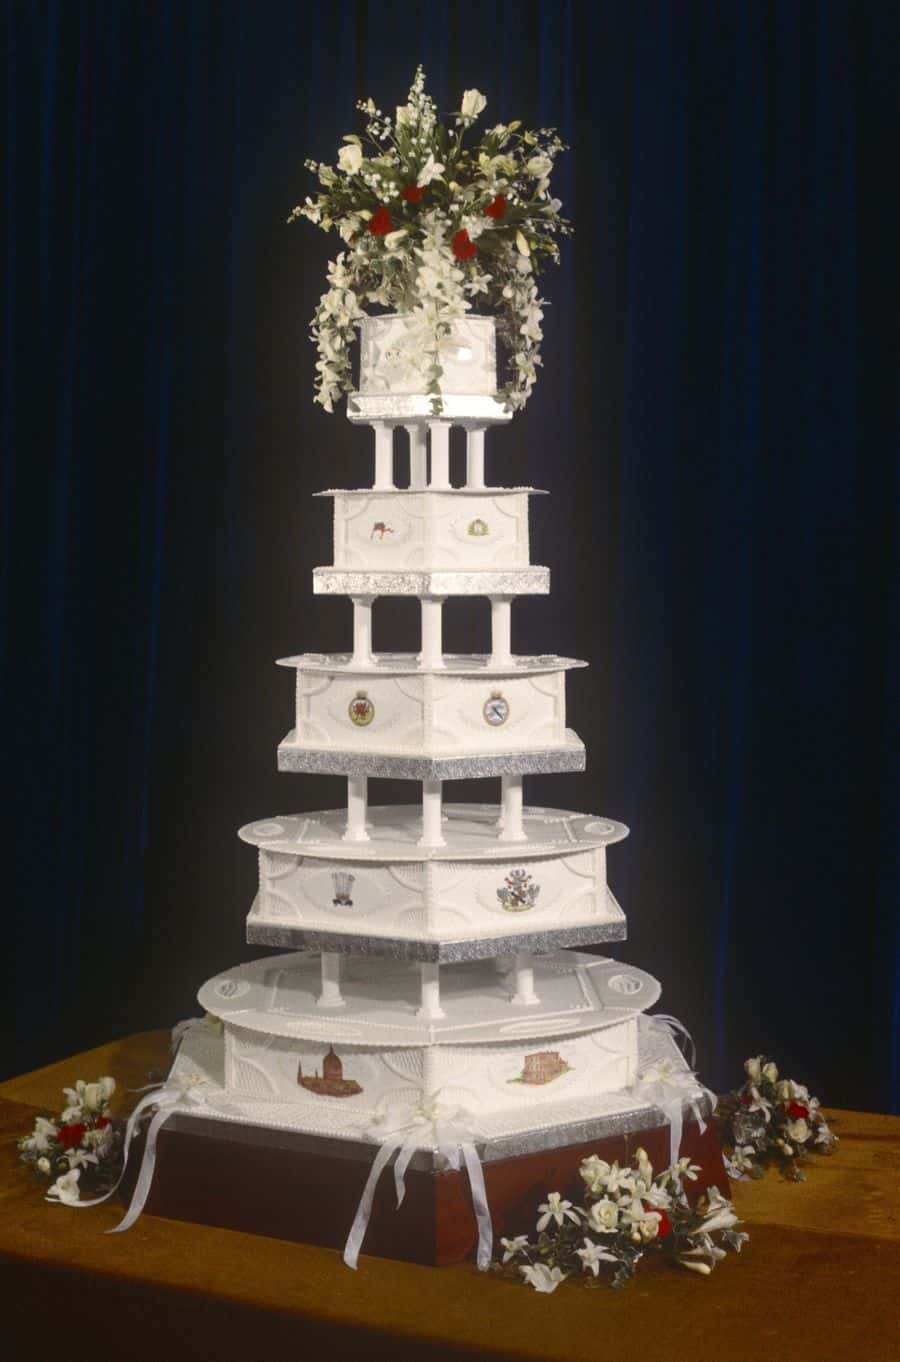 Prince Charles & Princess Diana wedding cake